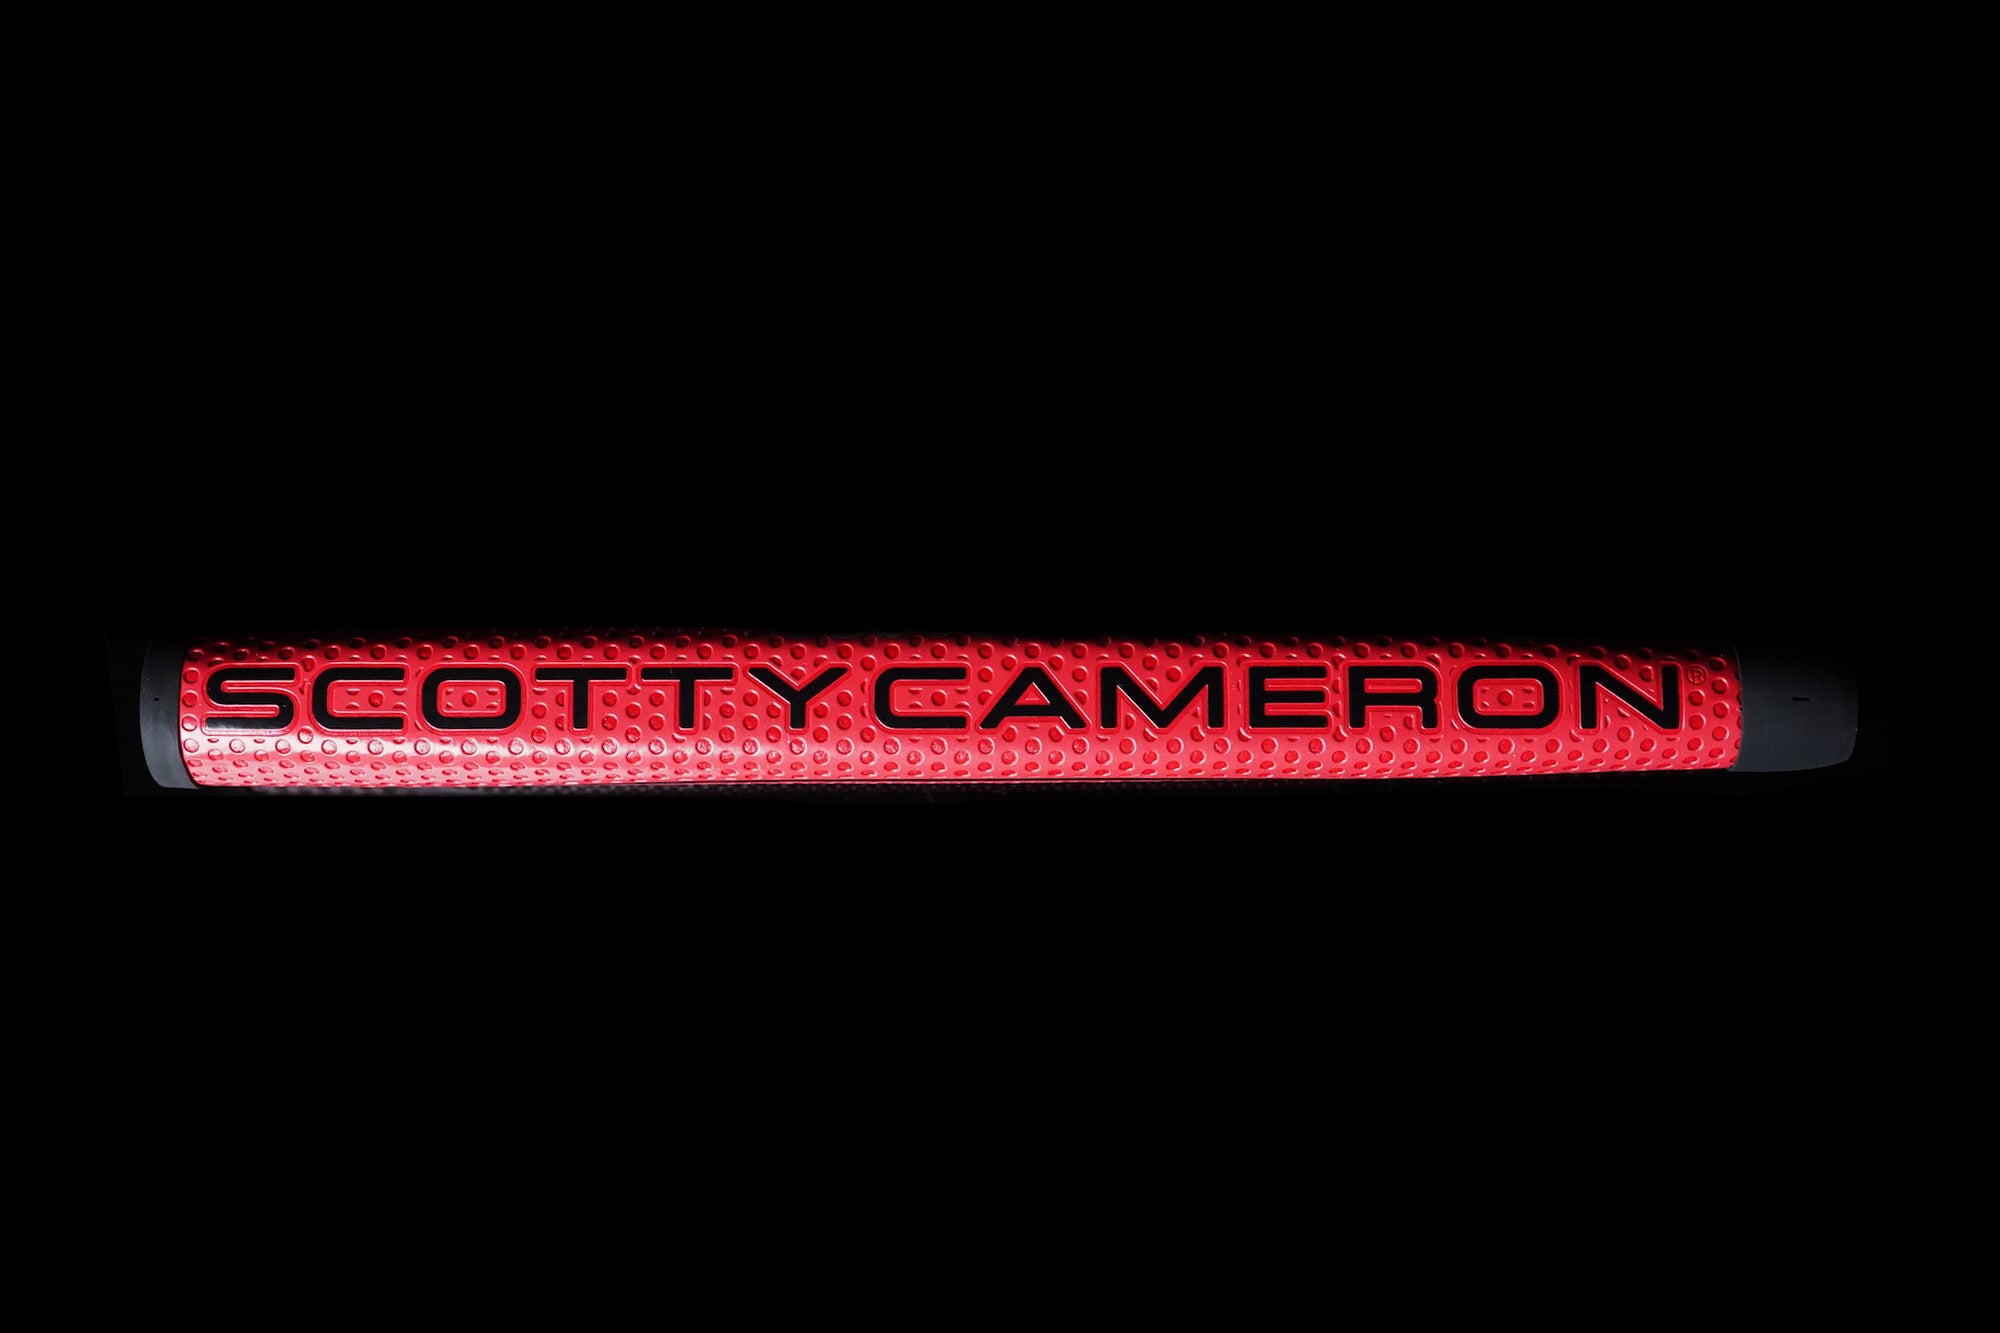 SCOTTY CAMERON MATADOR GRIP RED SMALL SIZE